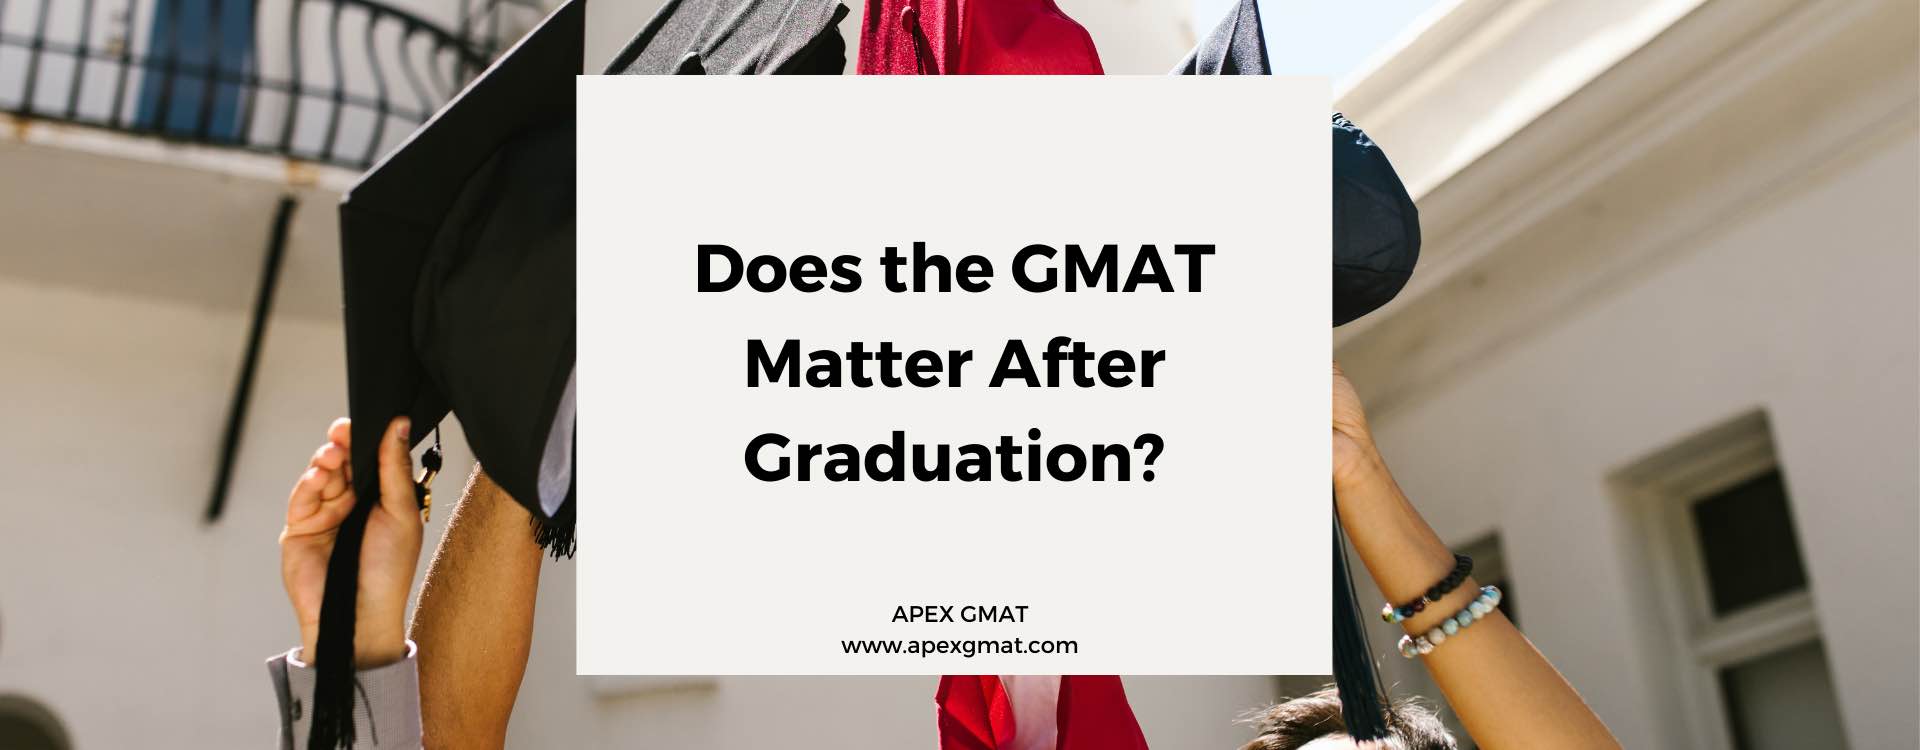 Does the GMAT Matter After Graduation?